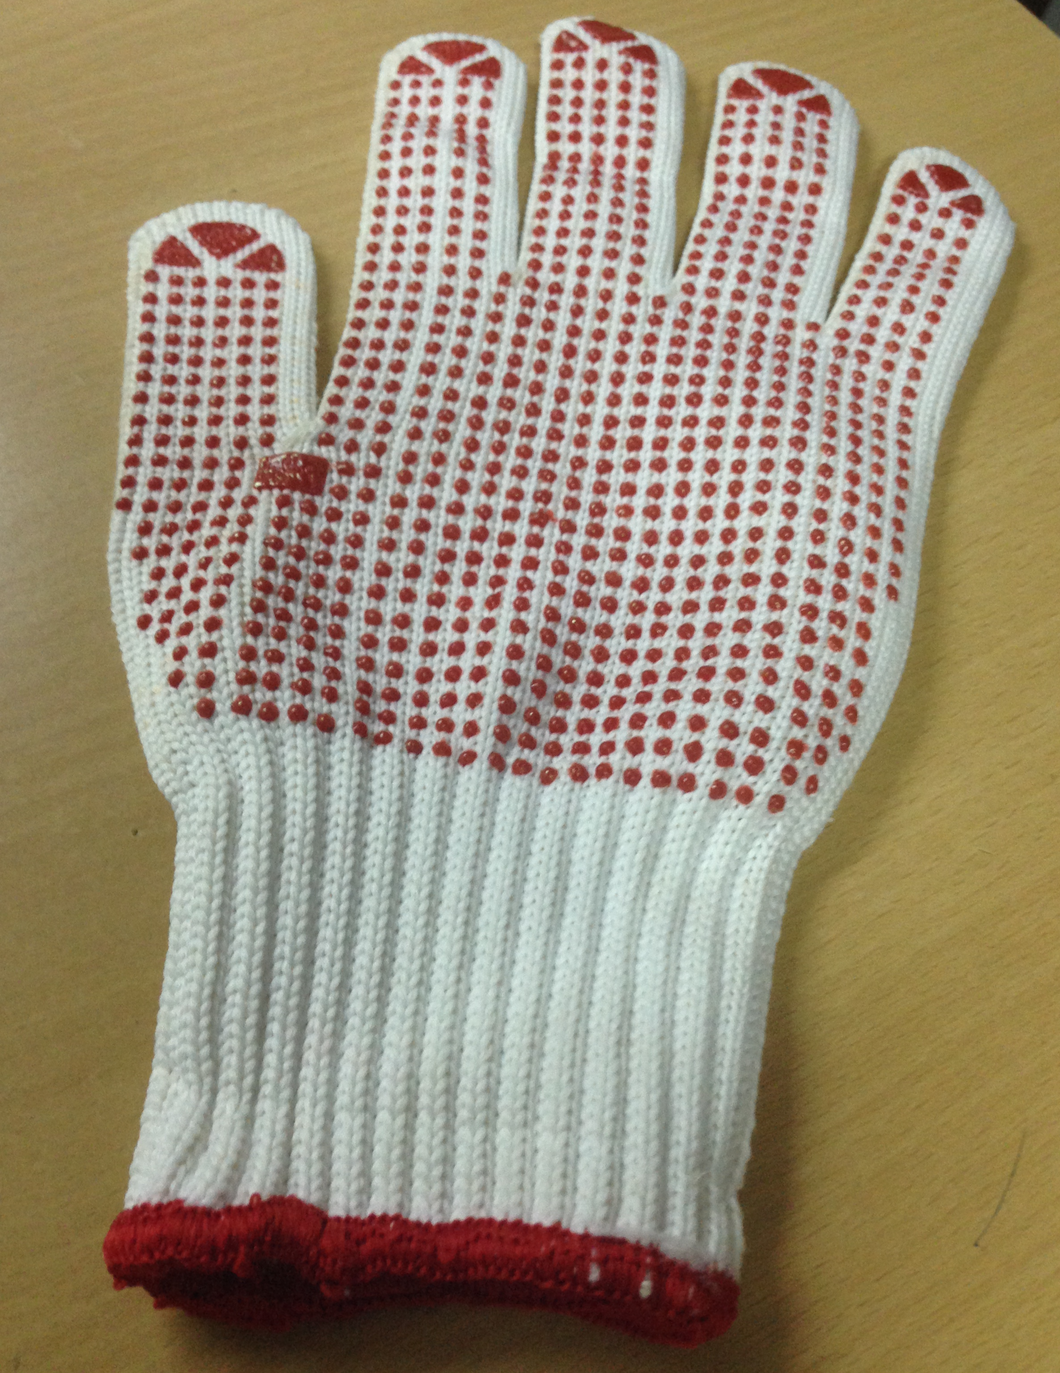 ITEM : VAG-003 Garden Farm Gloves